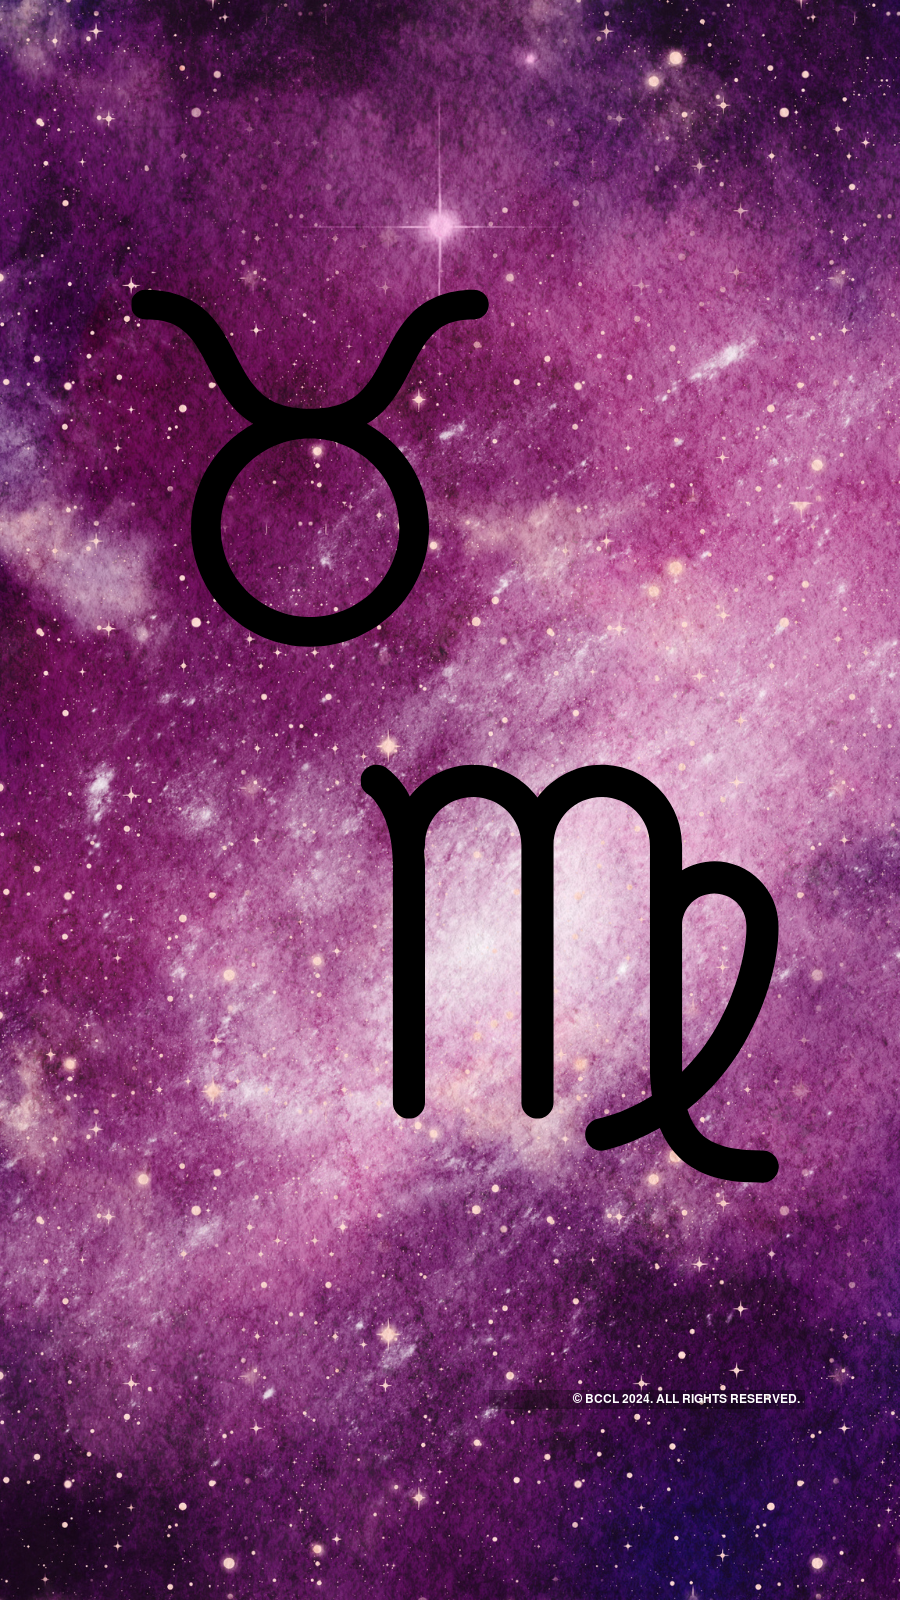 Download Aries Zodiac Sign Horoscope RoyaltyFree Stock Illustration Image   Pixabay